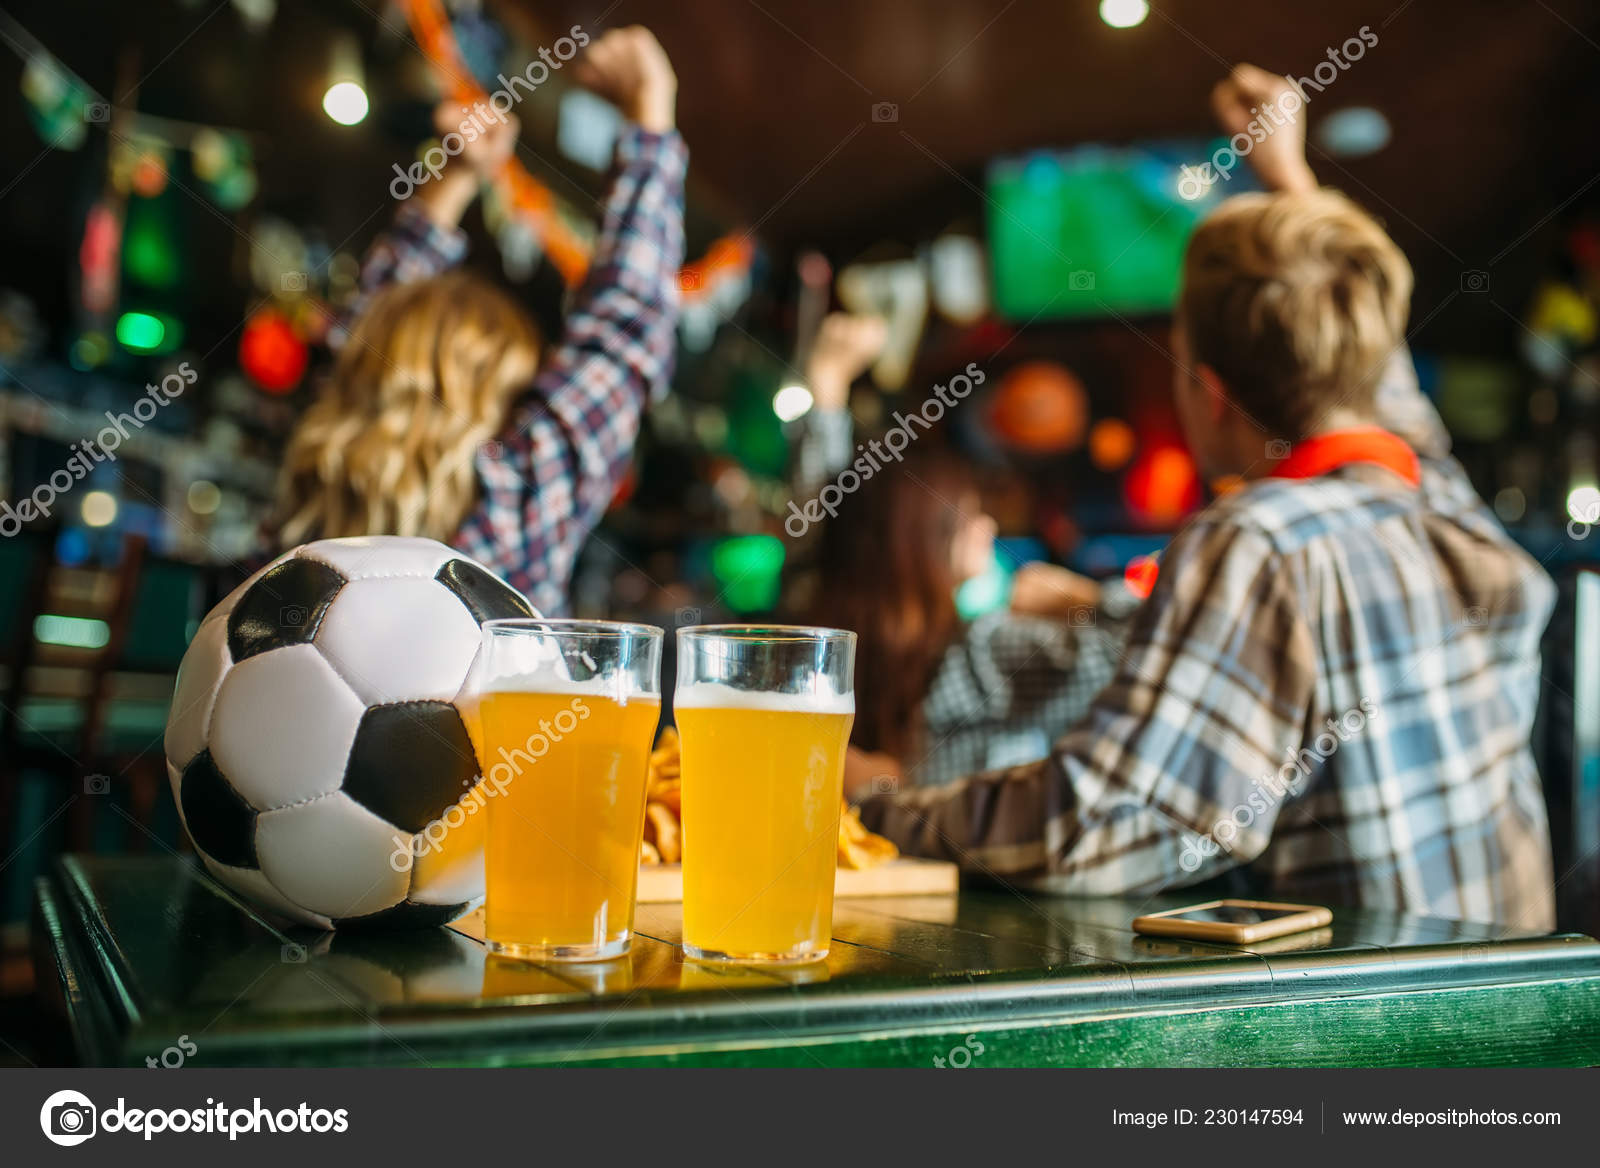 sports bar background